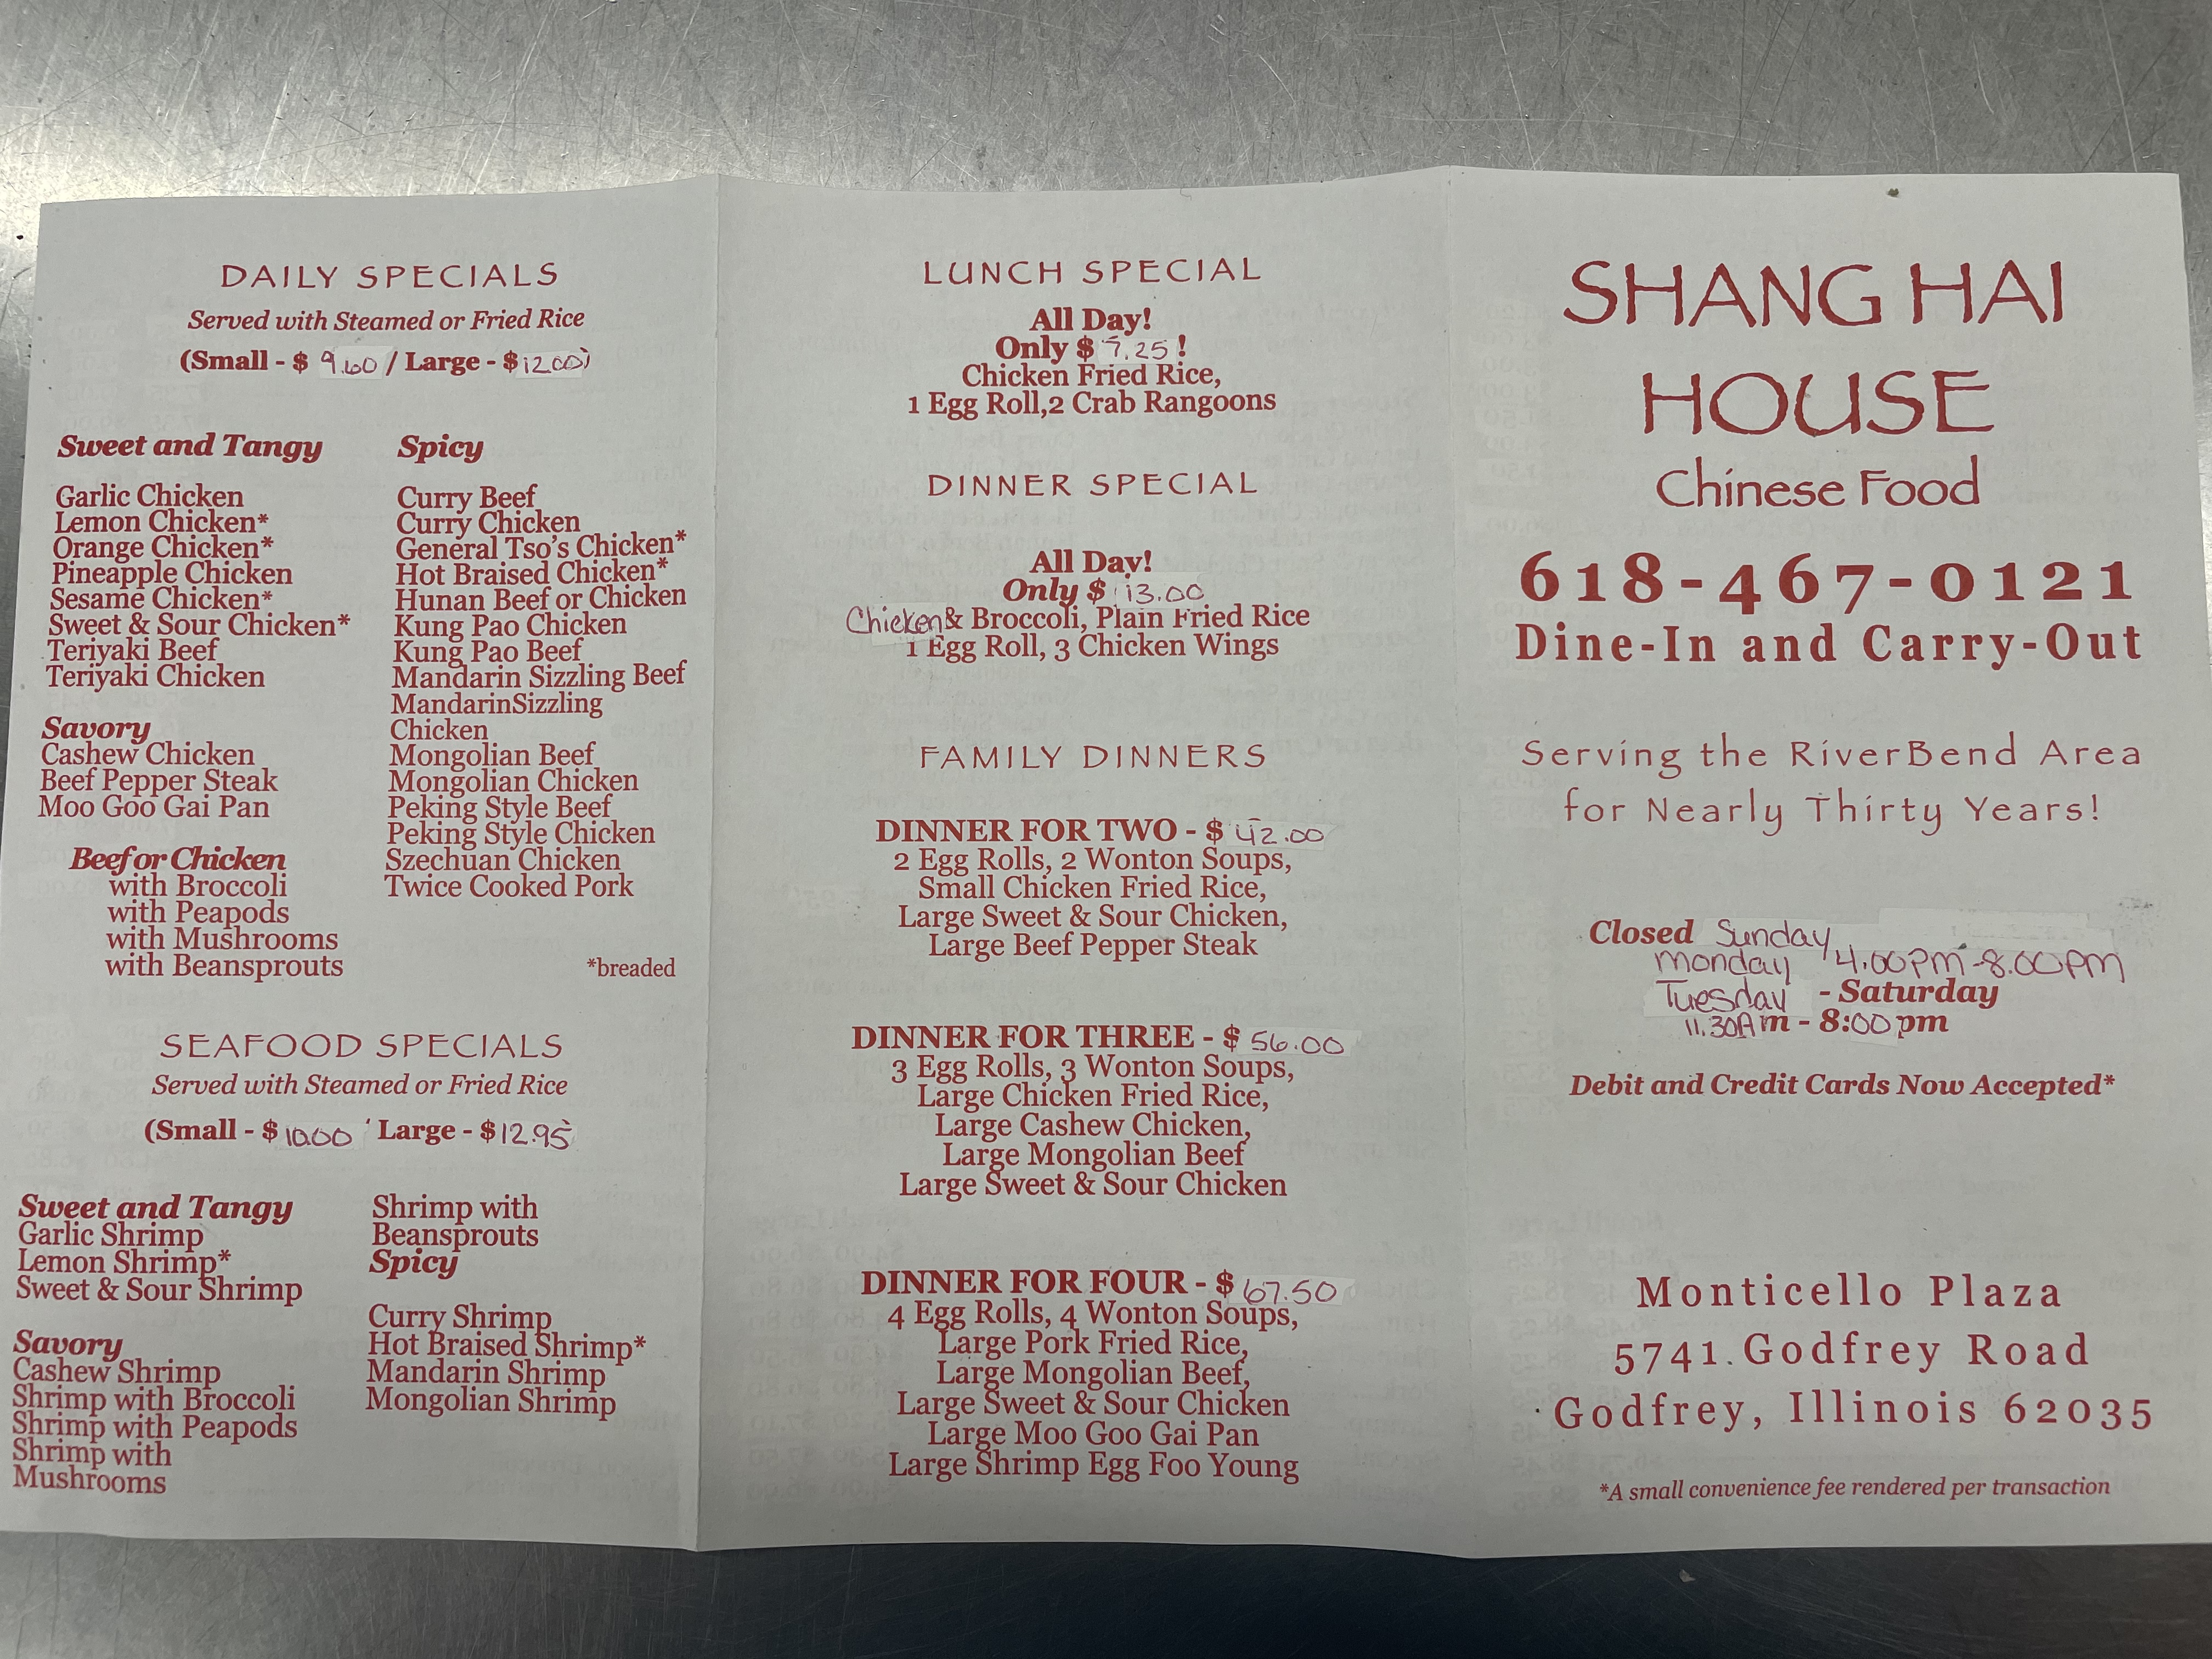 Shang Hai House Chinese Food 5741 Godfrey Rd, Godfrey, IL 62035